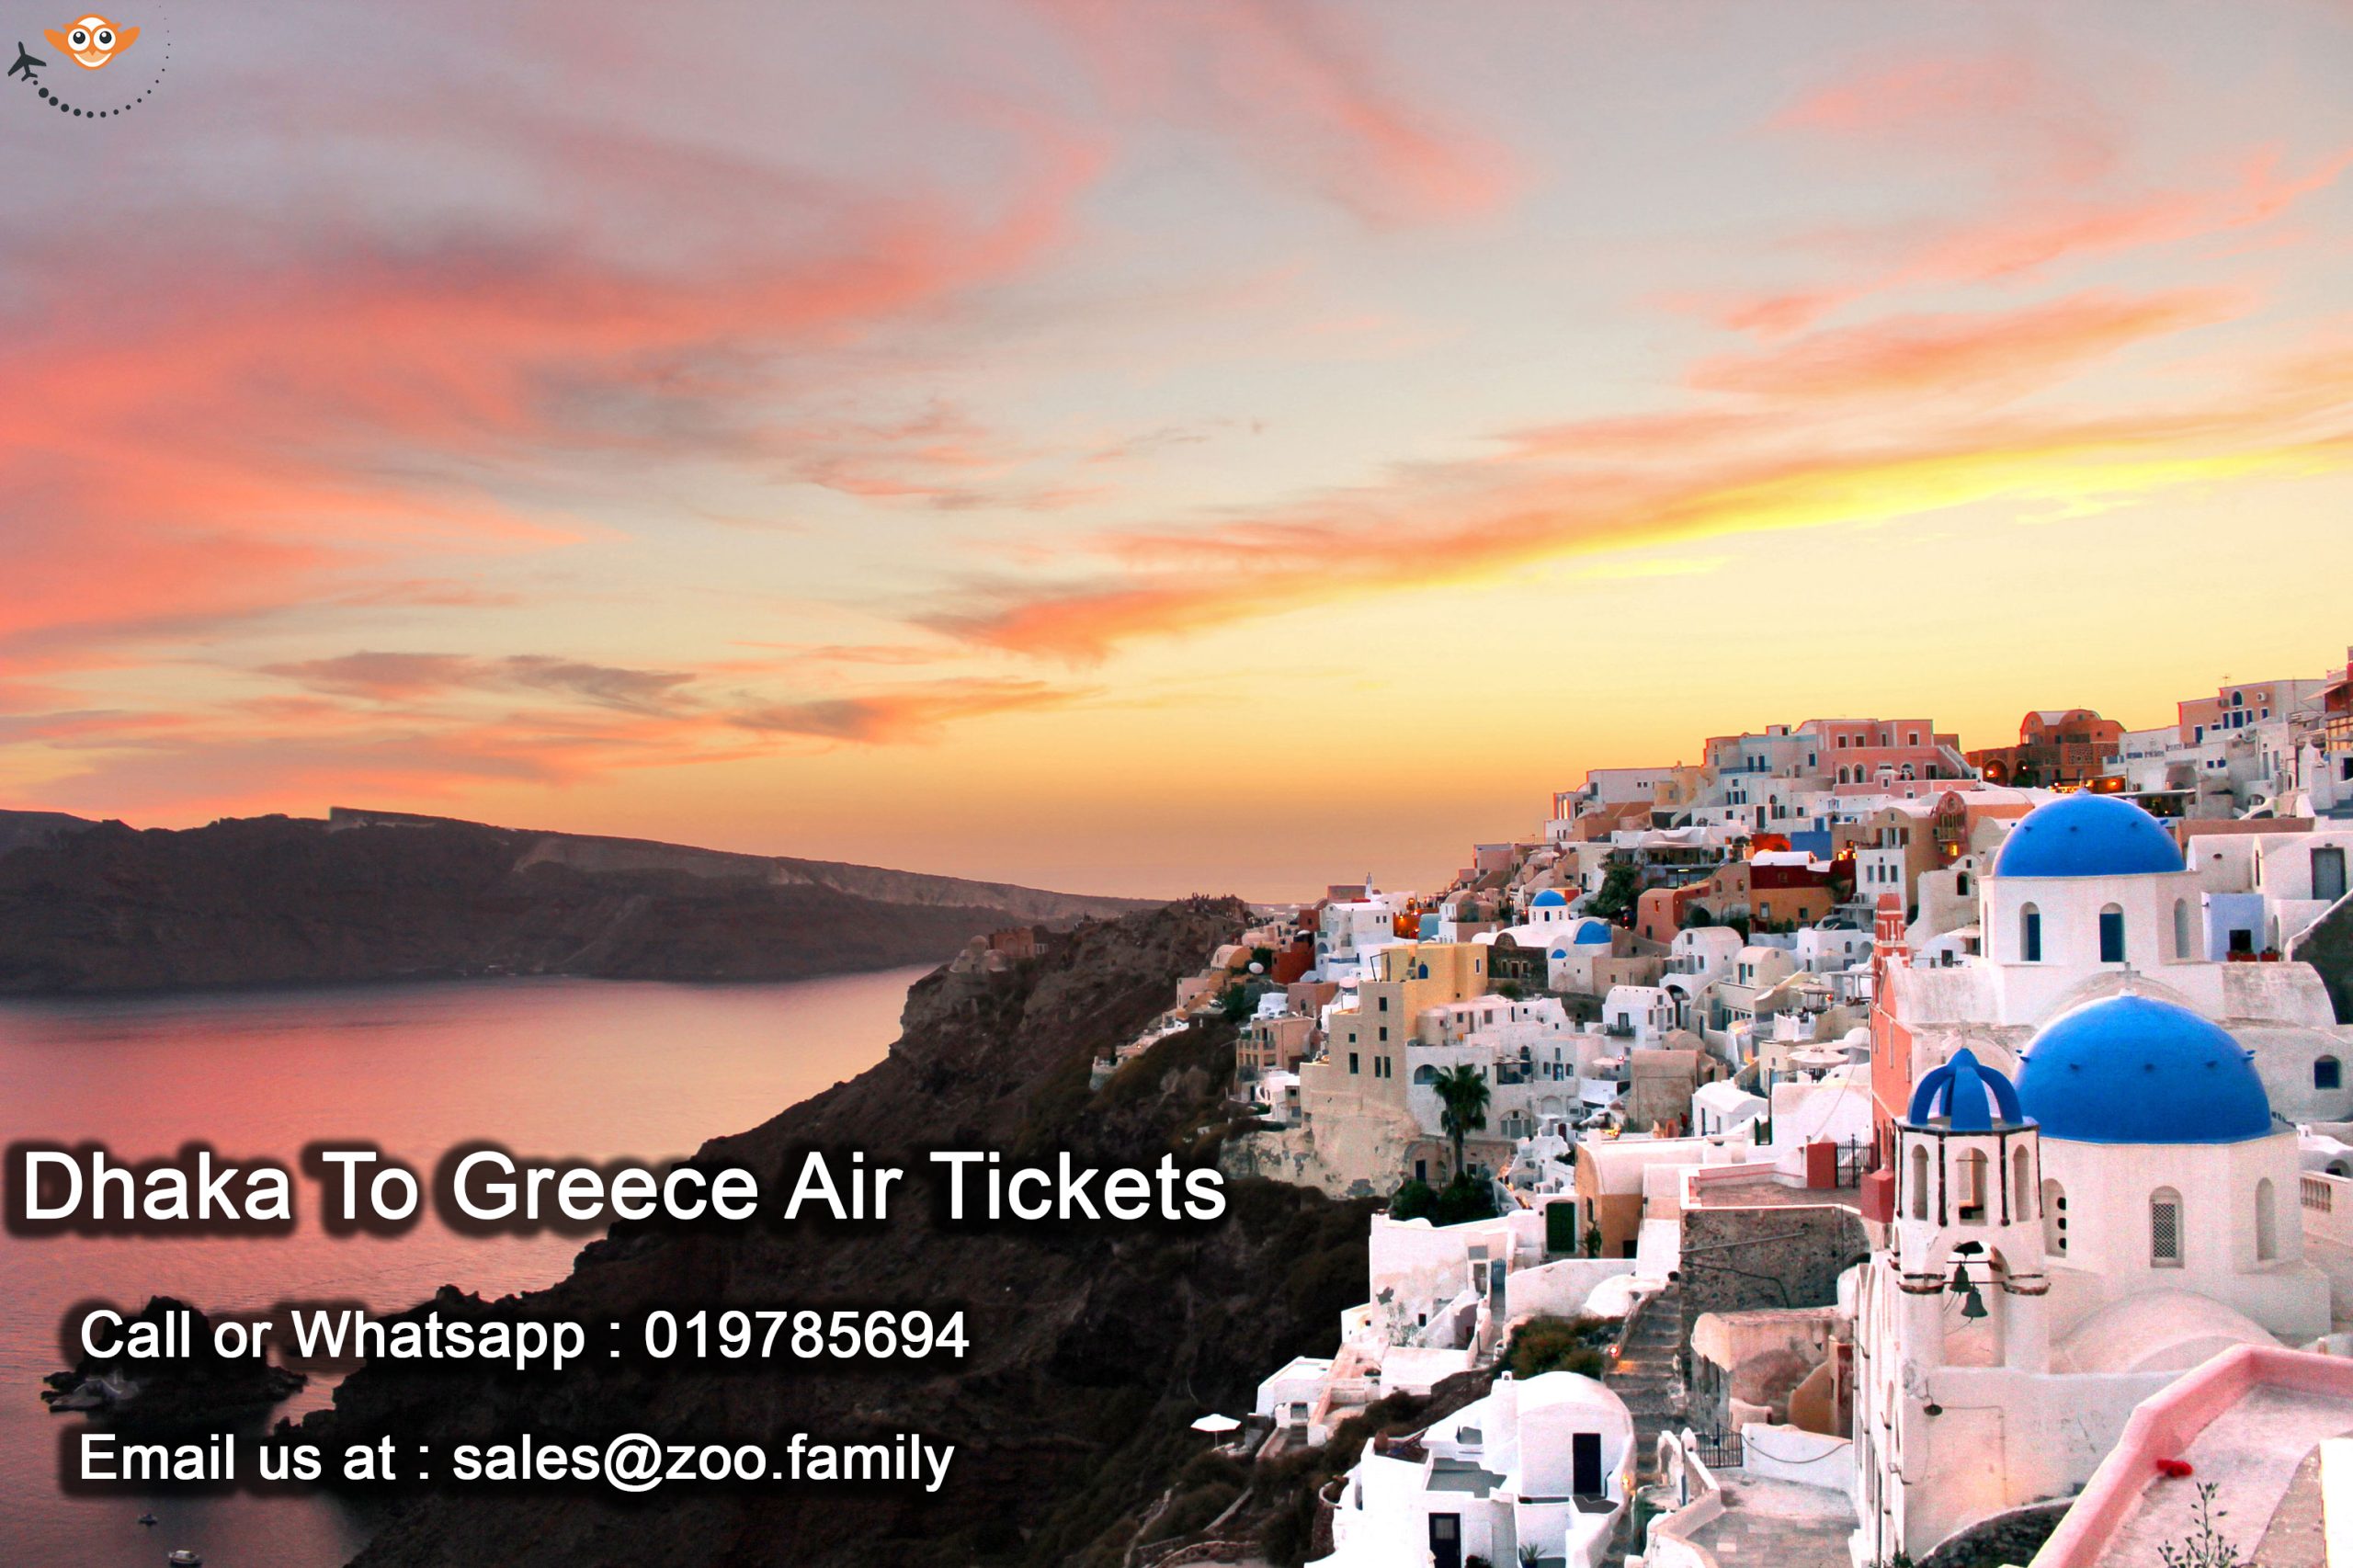 Dhaka to Greece Air Tickets